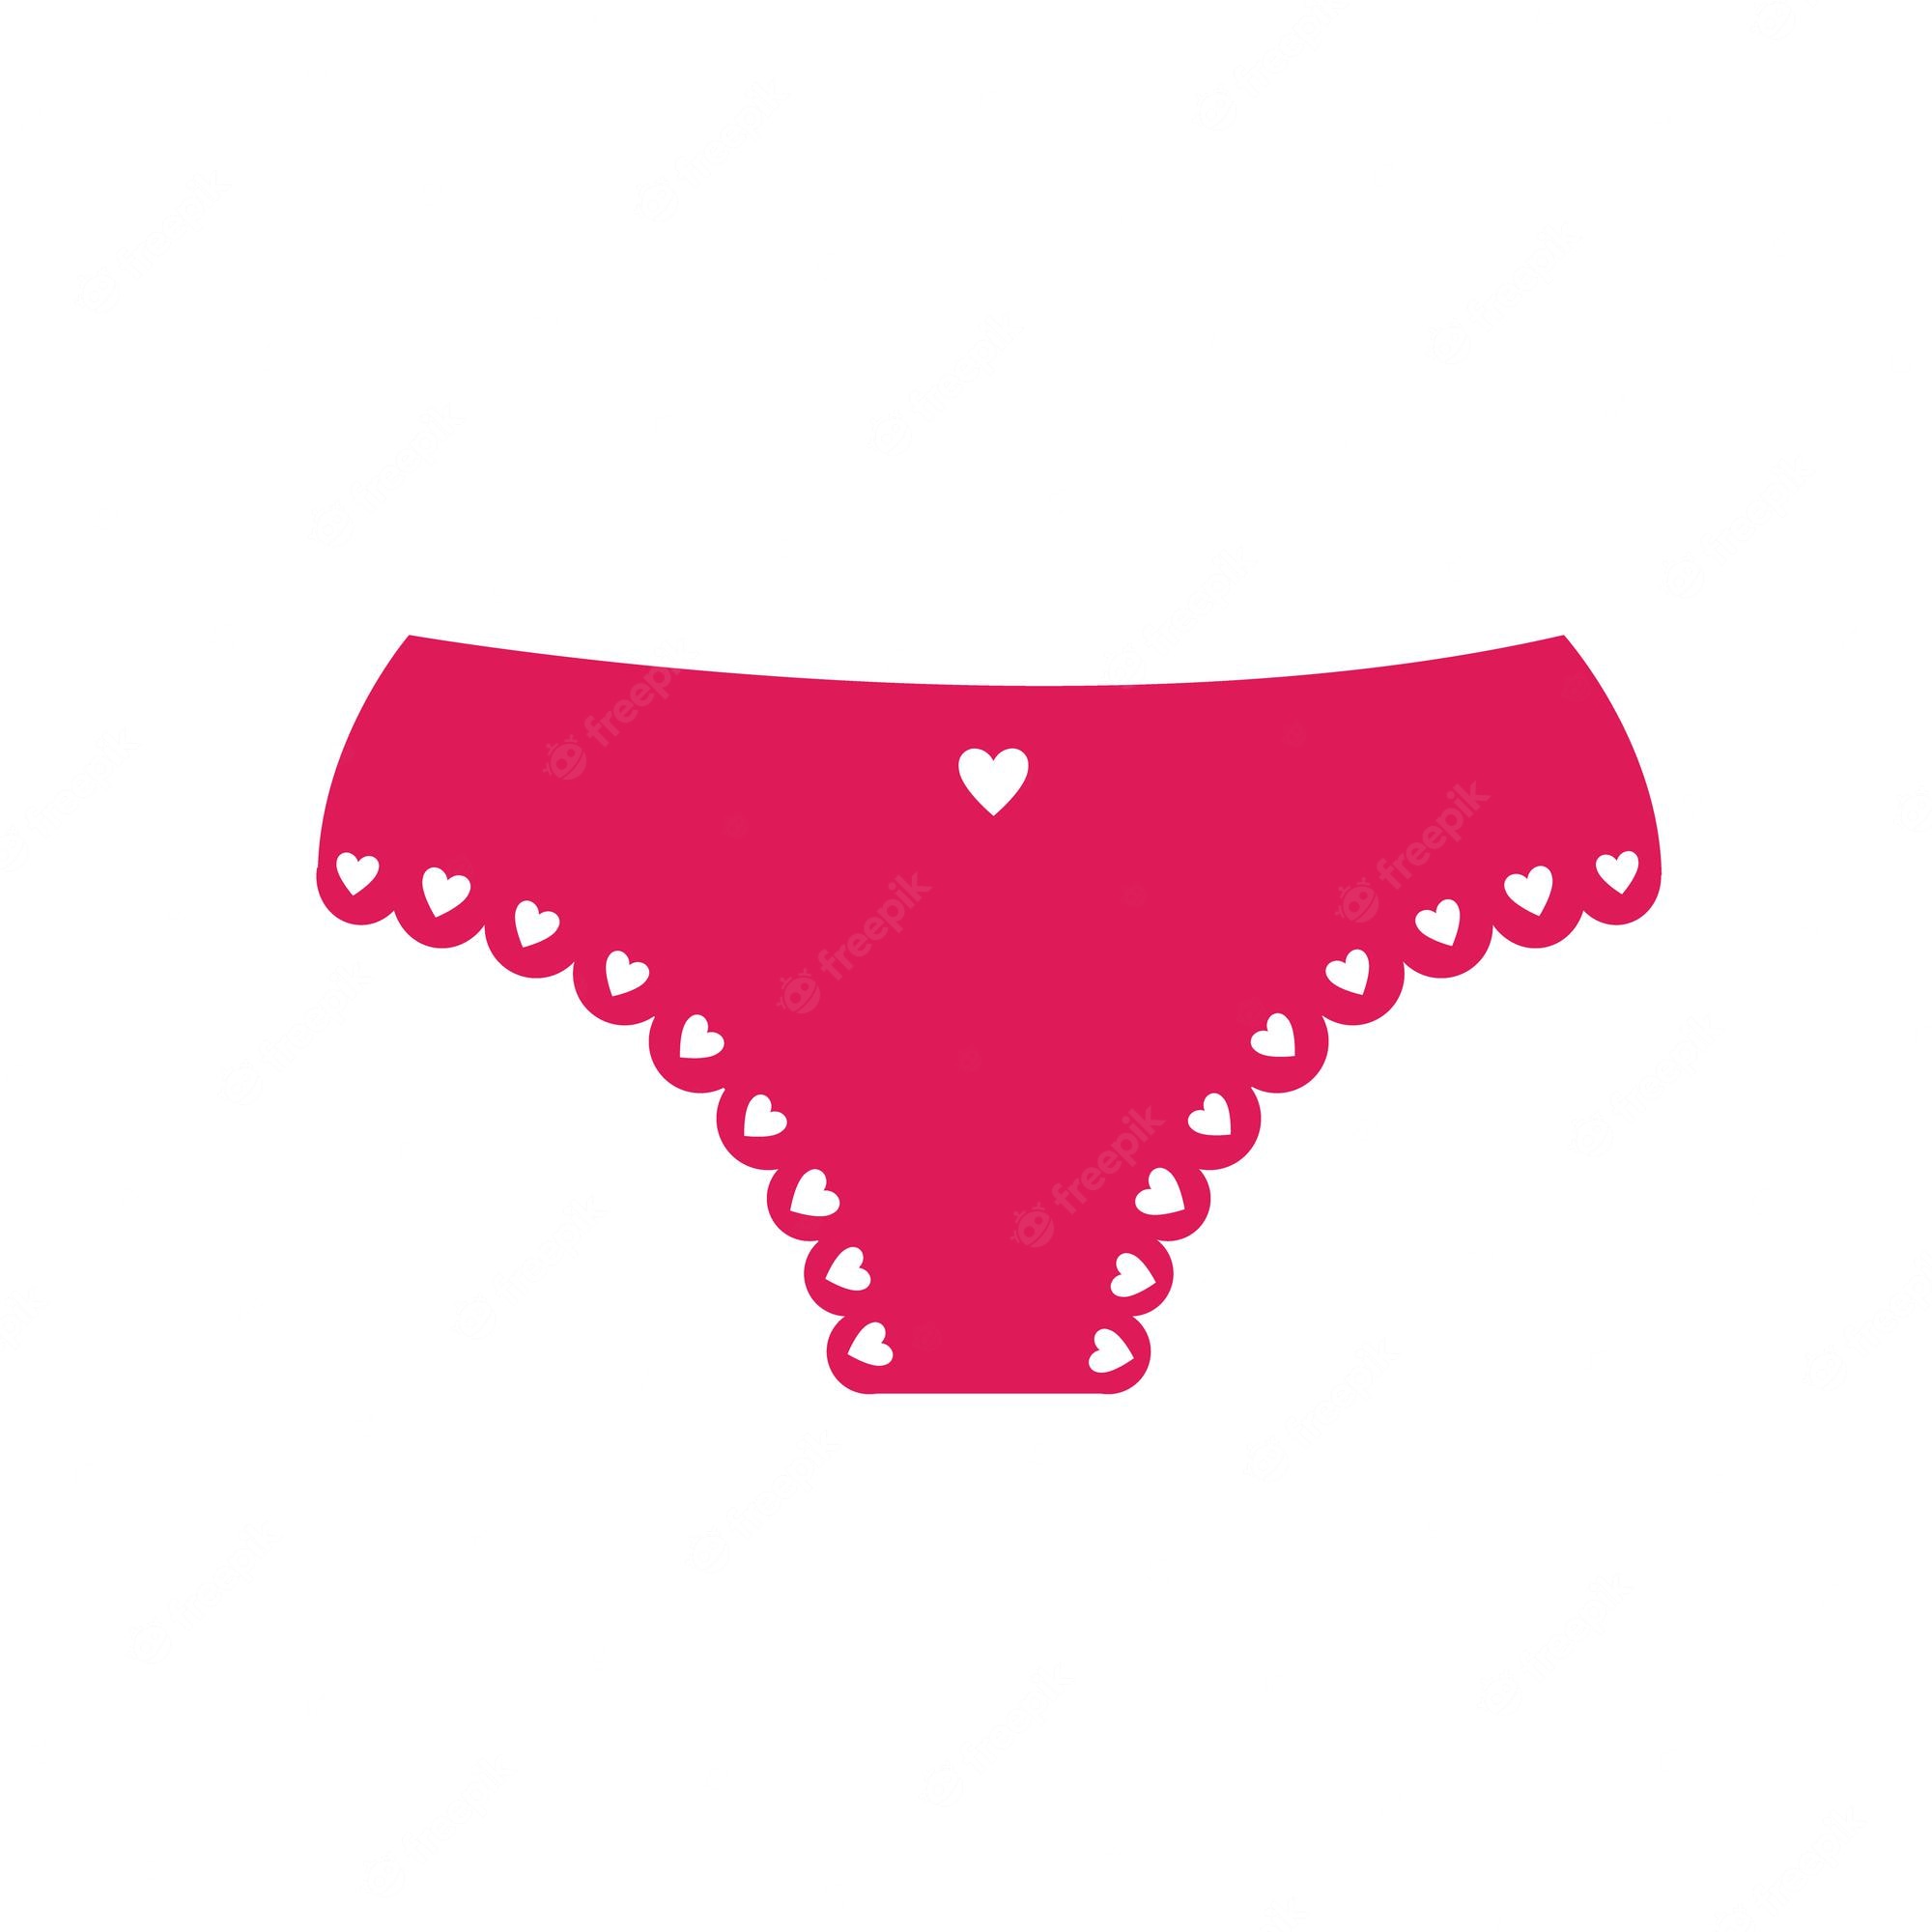 Underwear Images - Free Download on Freepik